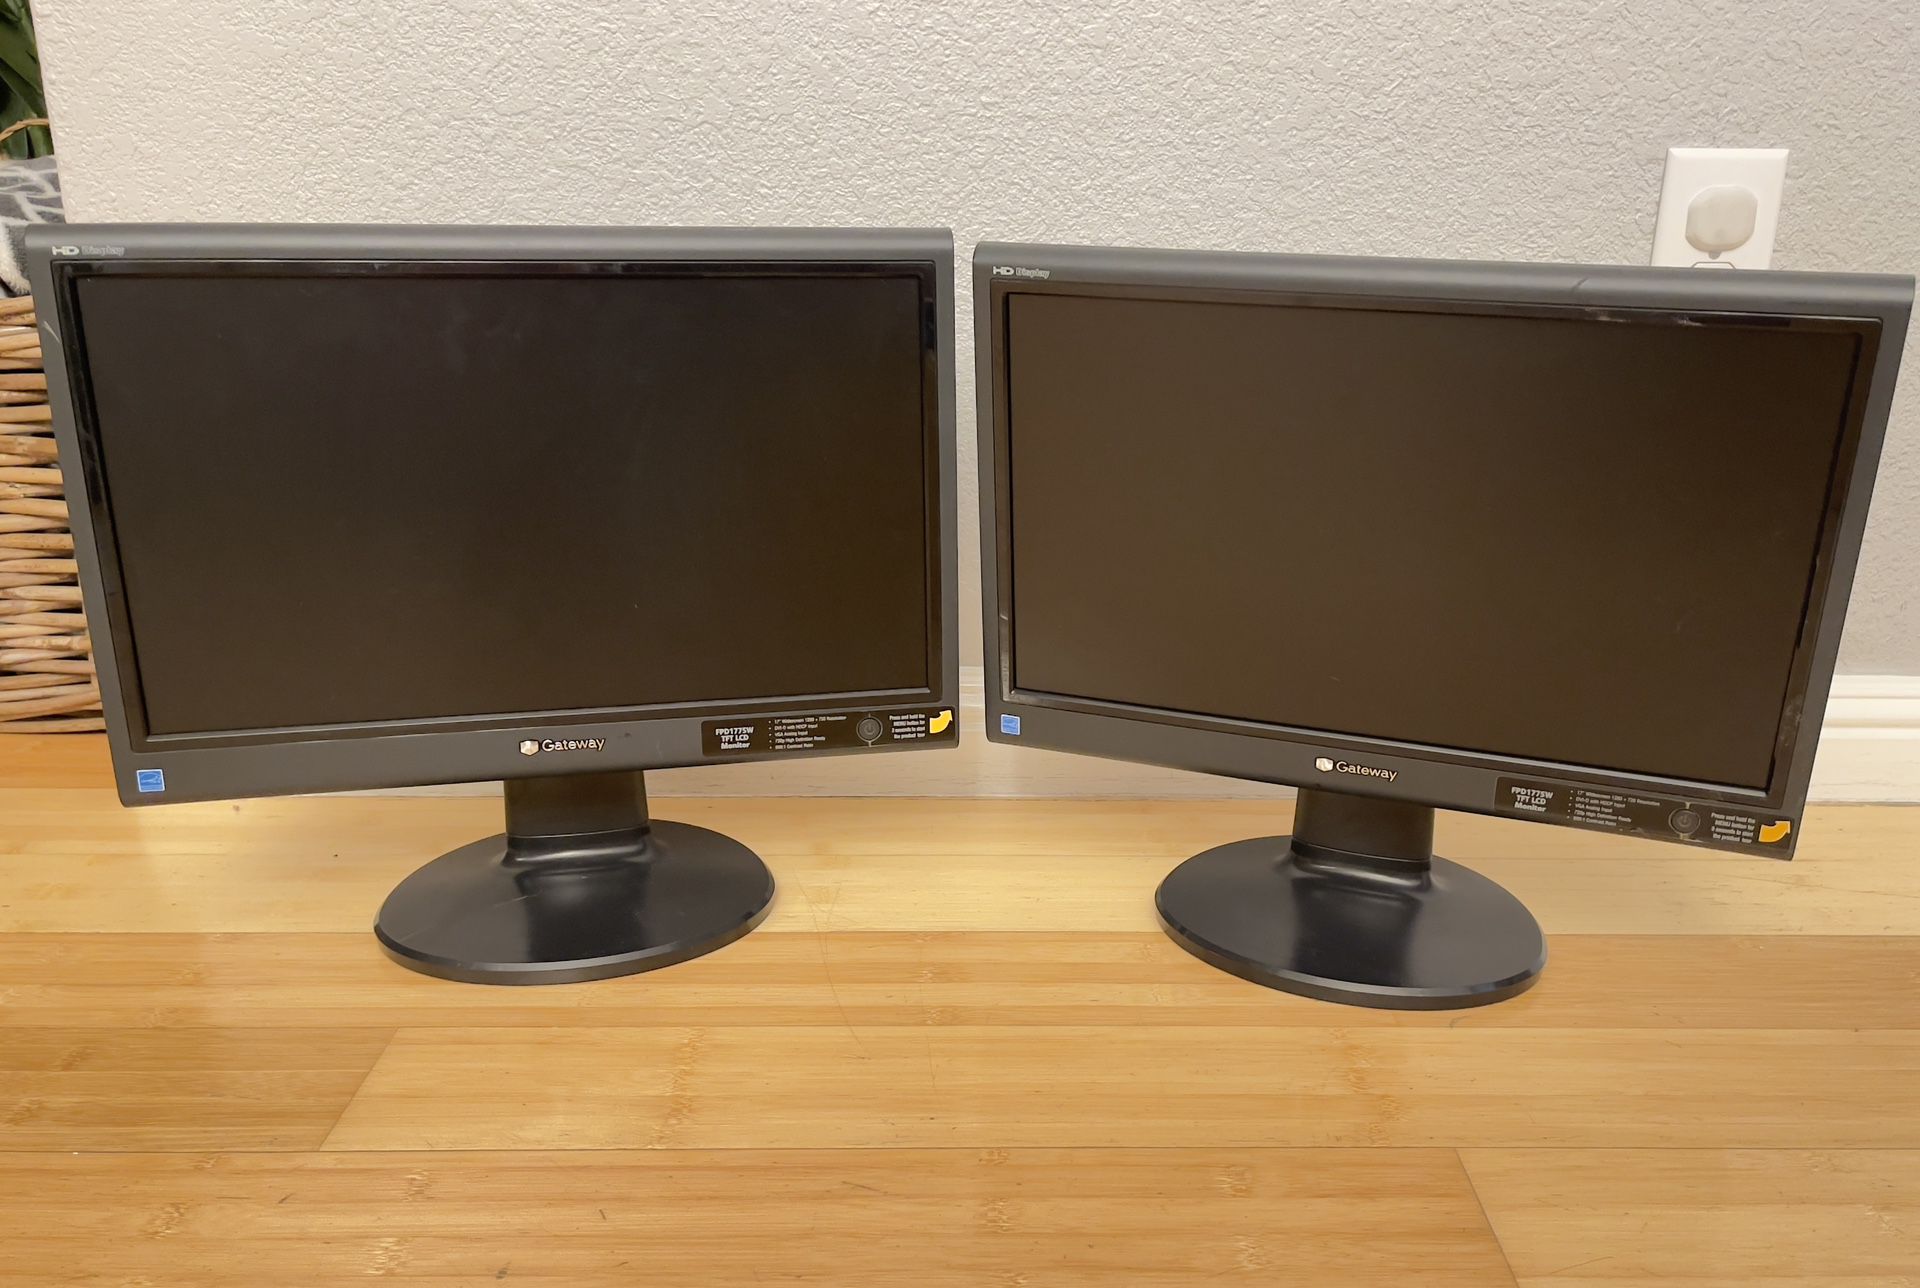 (x2) Gateway Computer Monitors (FPD1775W)